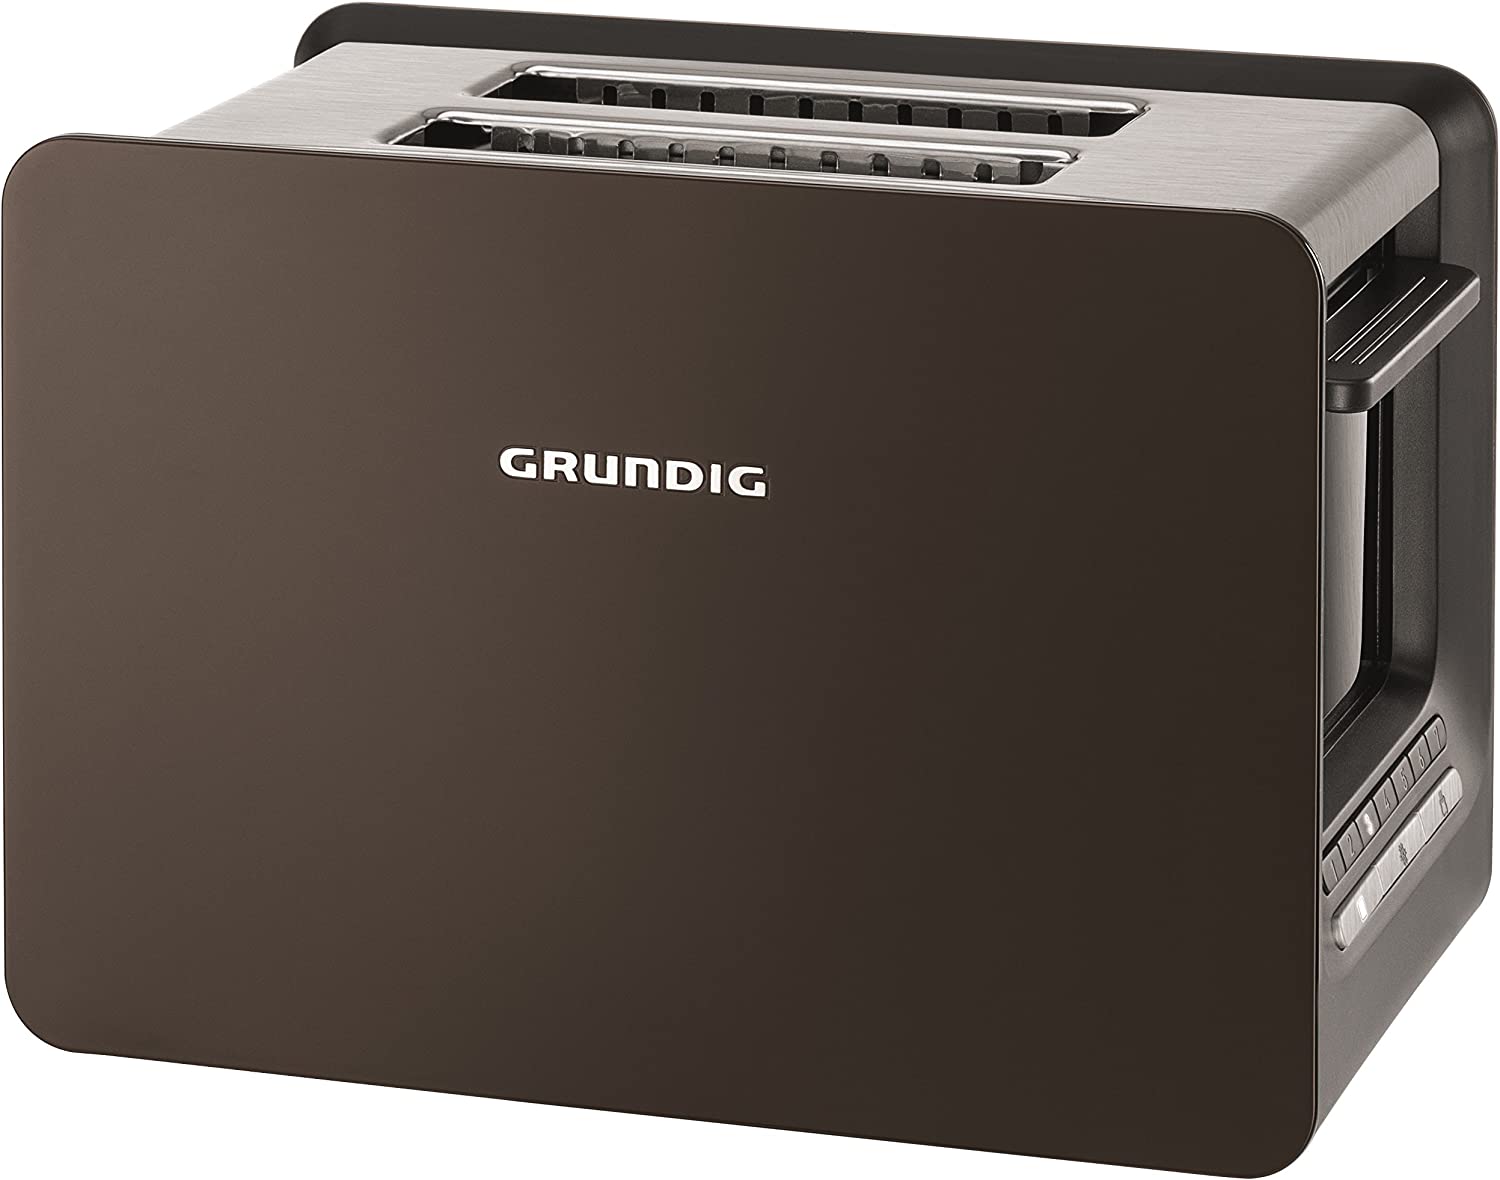 Grundig TA 7280 2-Slot Toaster (Toast Gourmet with LED Display, 1000 Watt) white